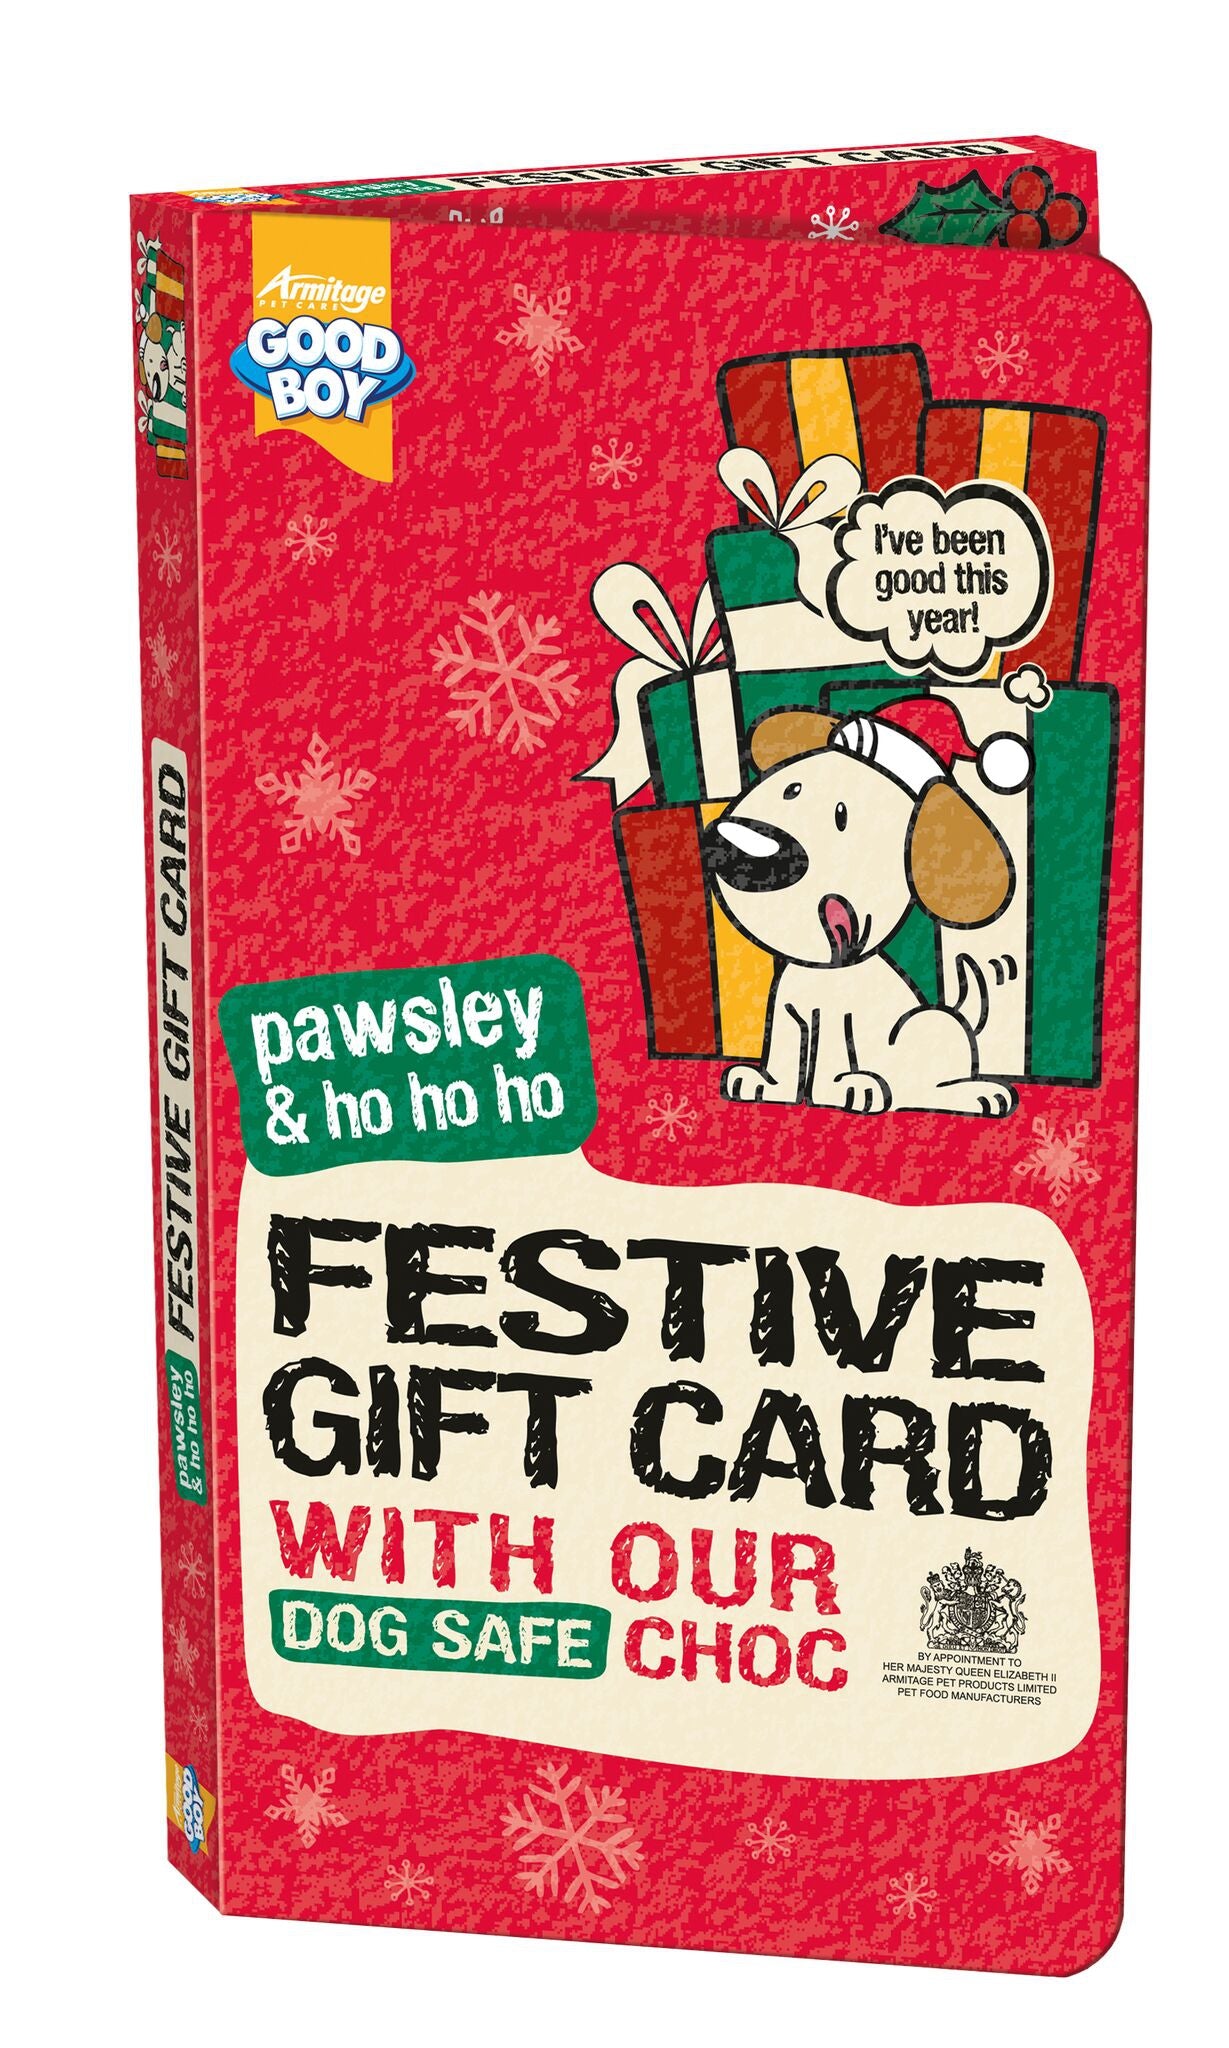 Good Boy Dog Gift Card Chocolate